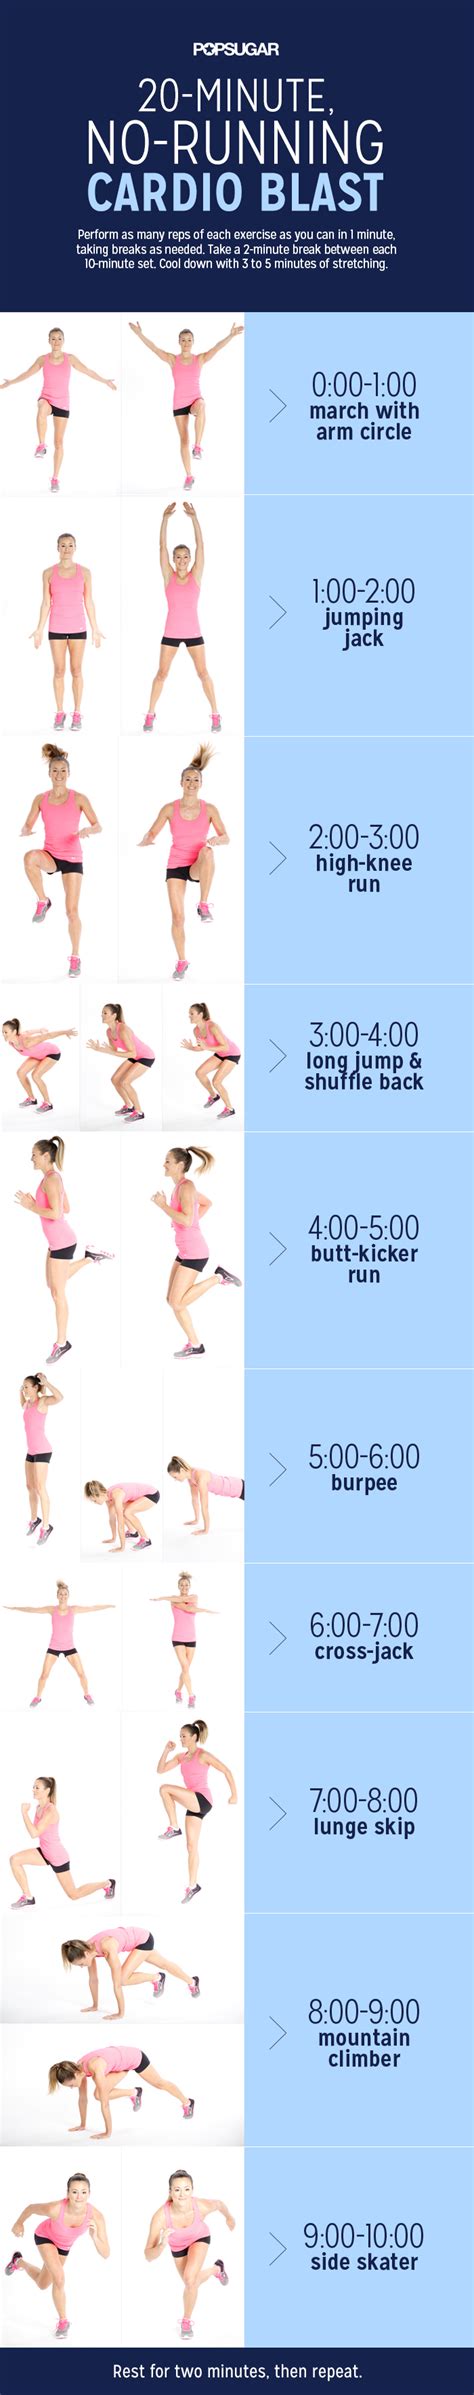 Home Cardio Workout | No Running | POPSUGAR Fitness